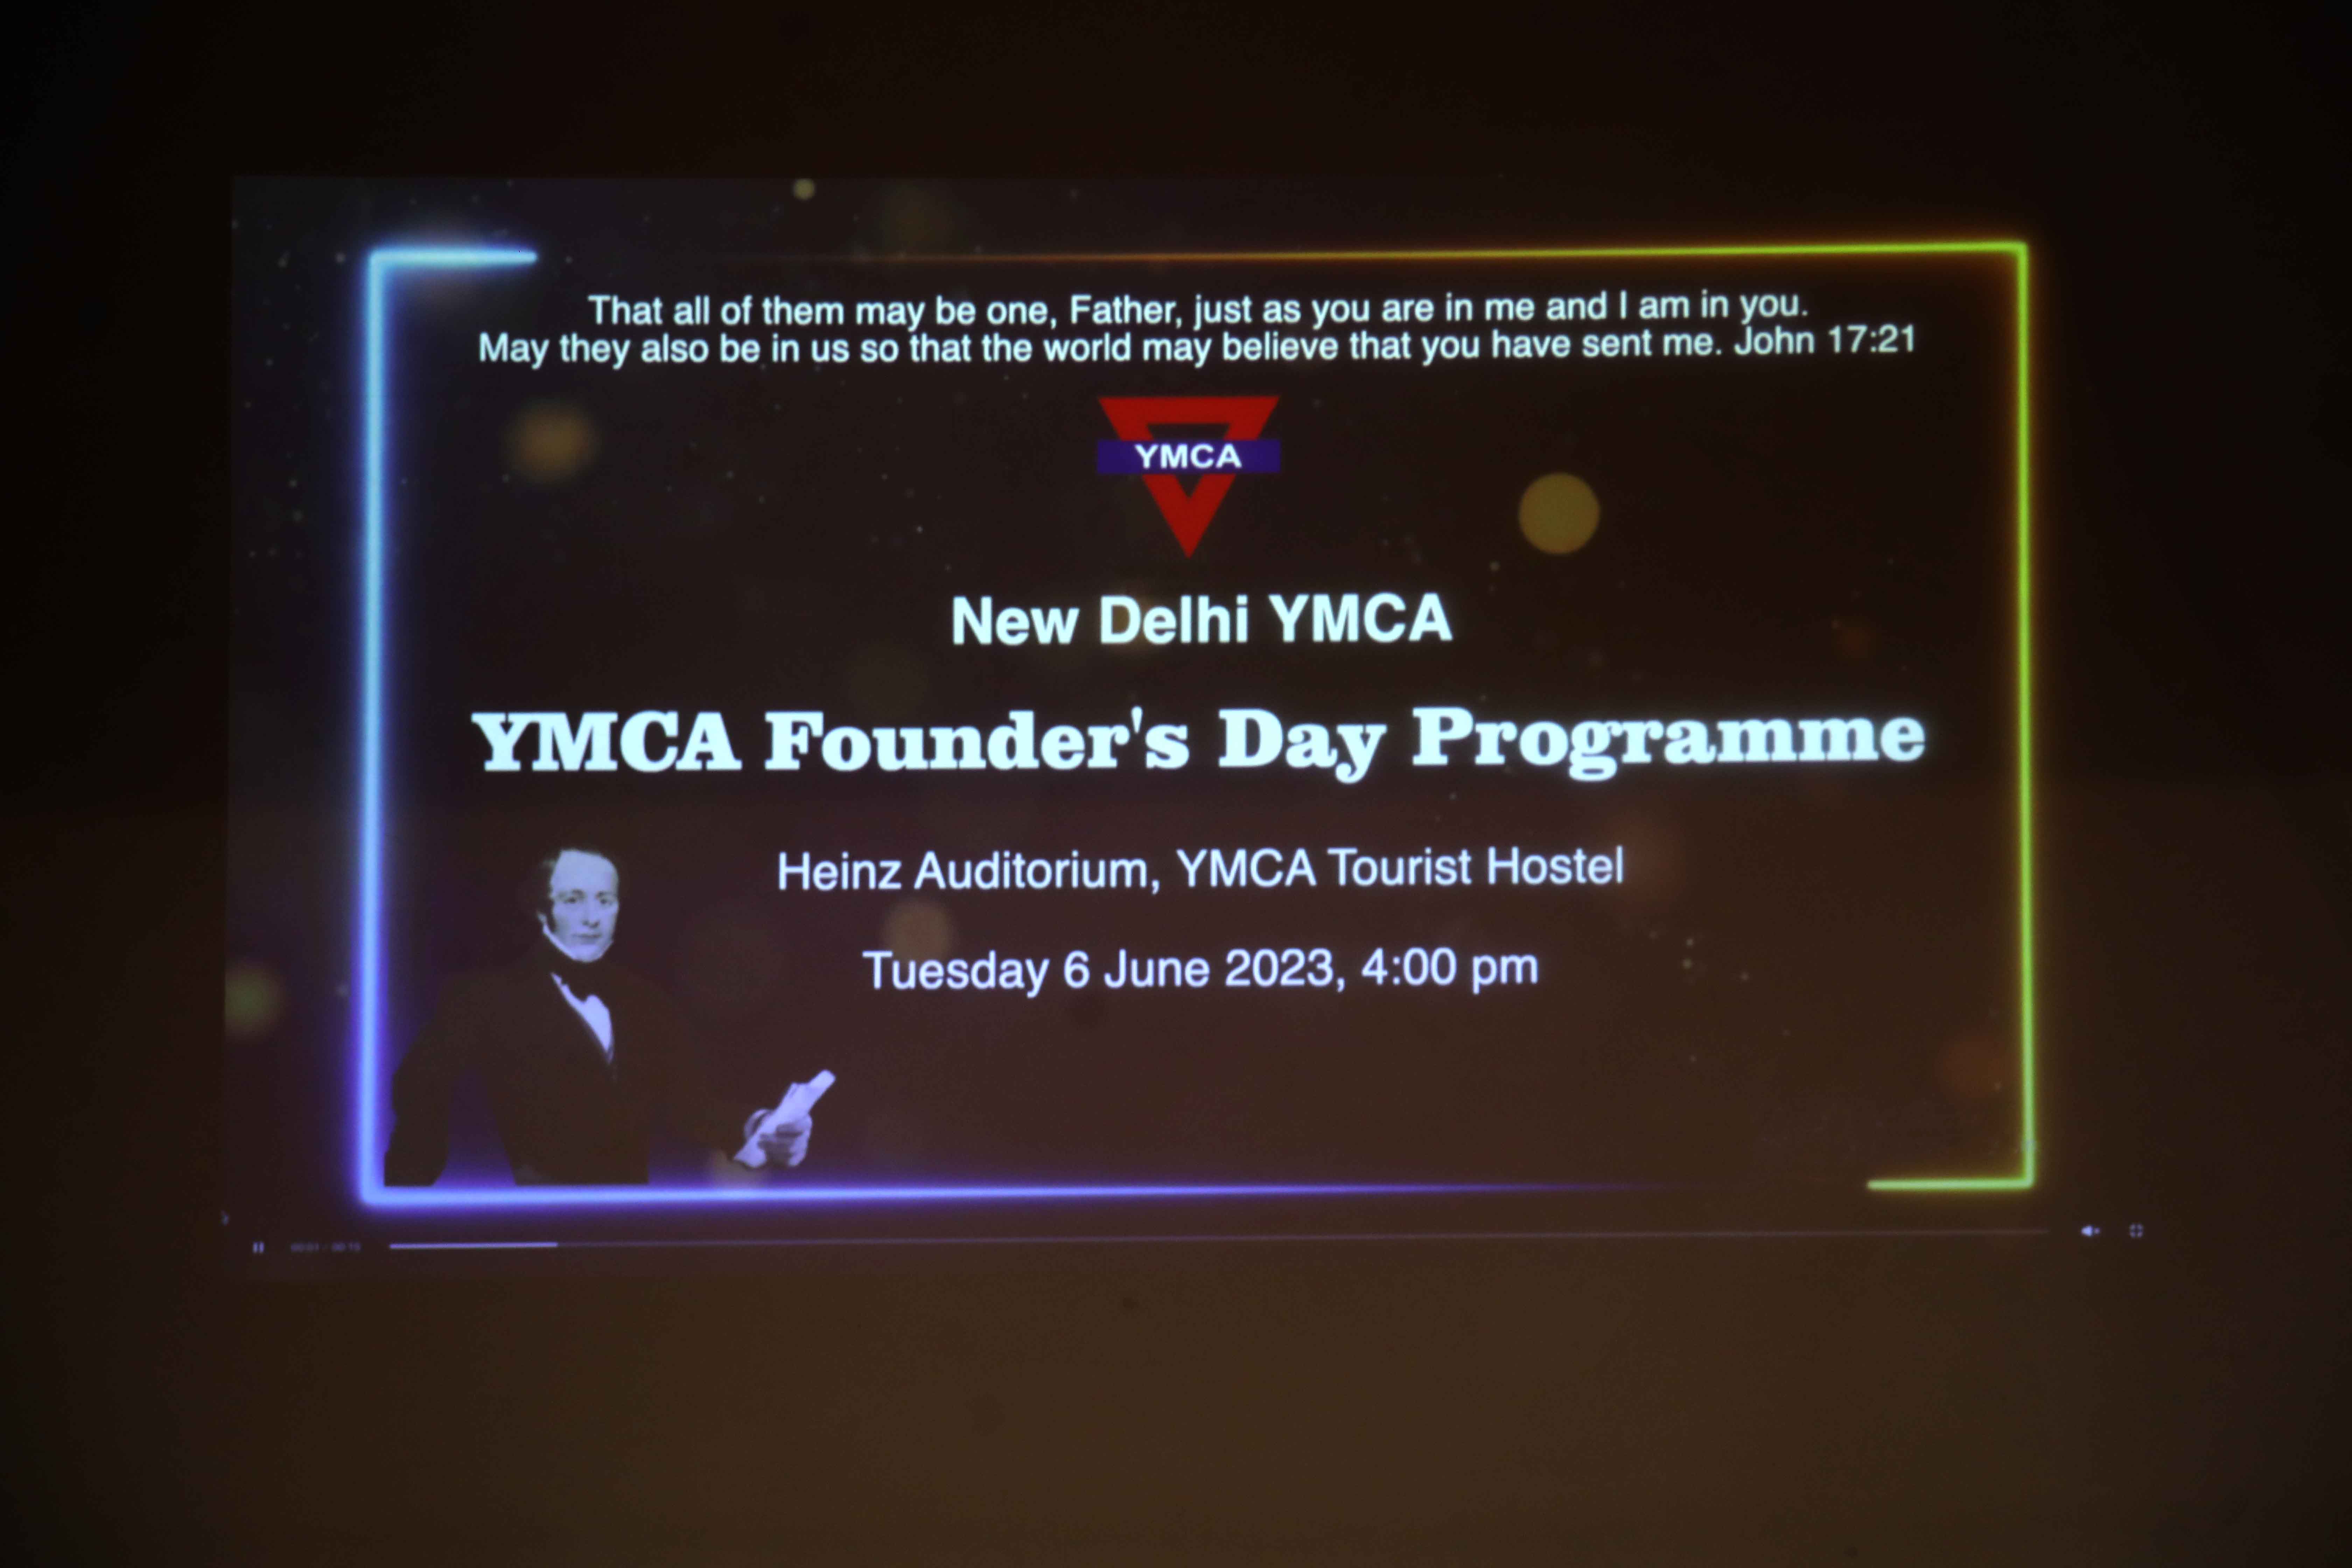 6th June Founder's Day Prog at New Delhi YMCA